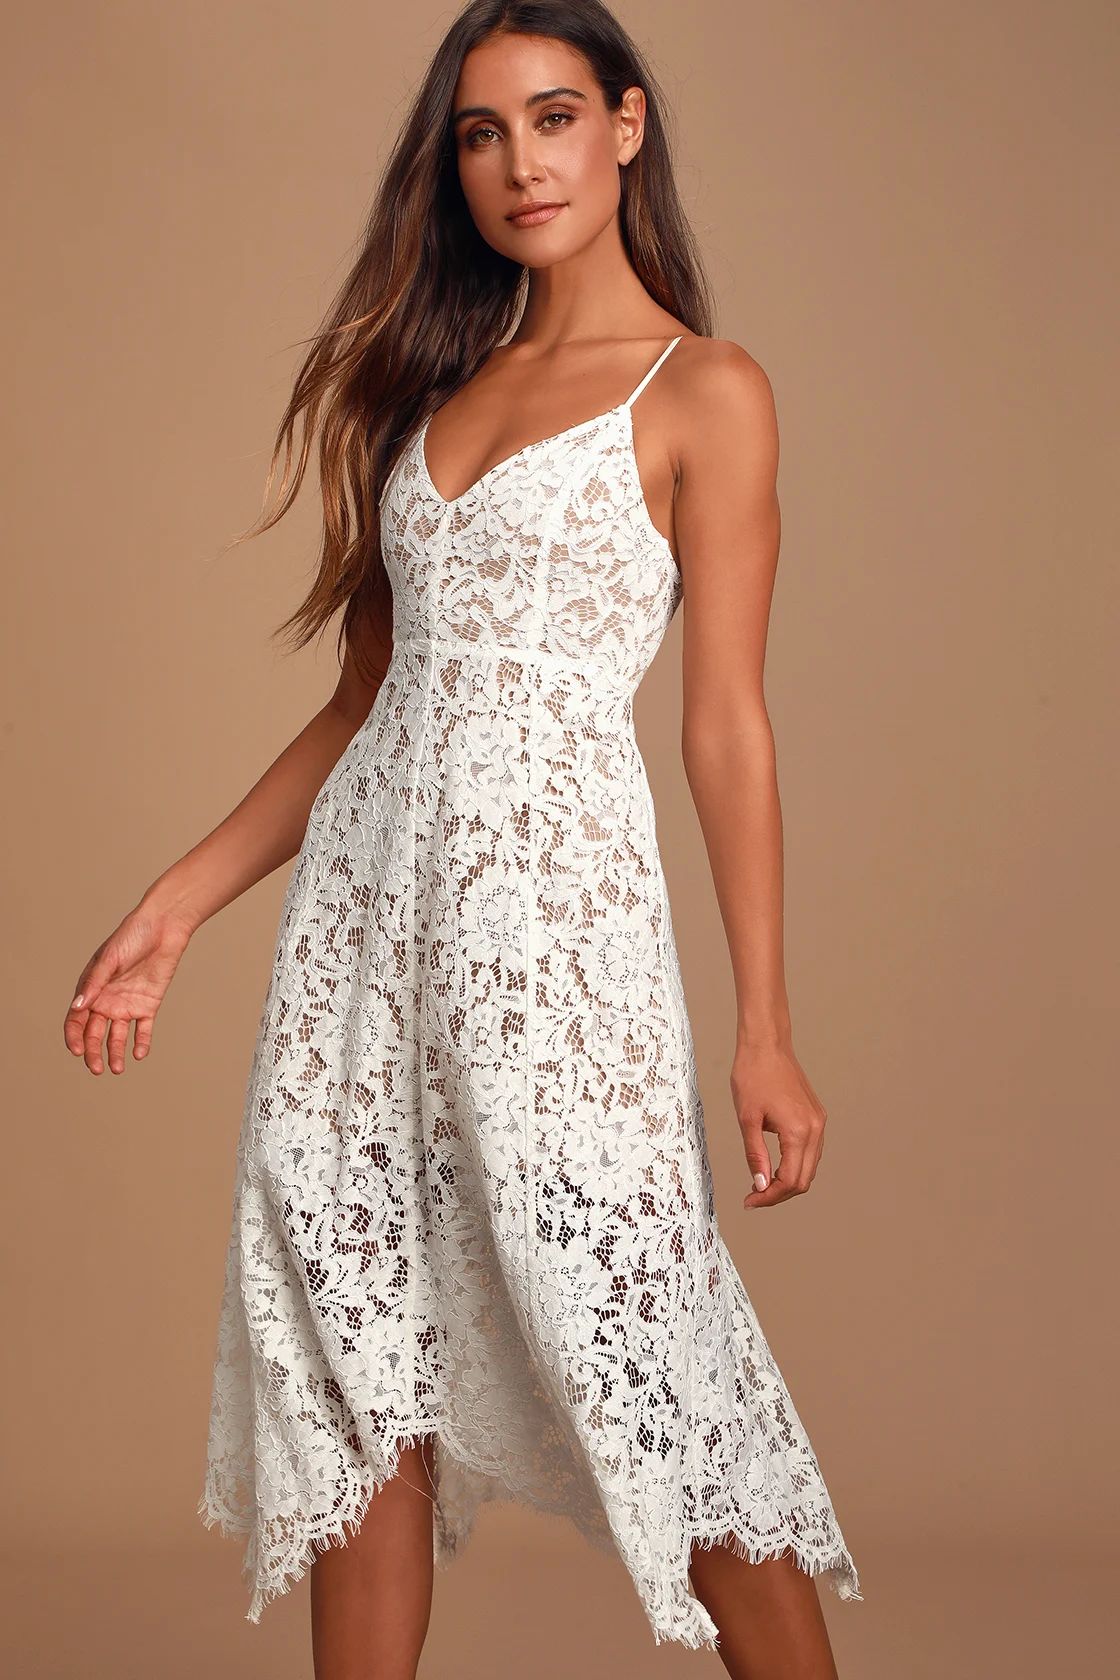 One Wish White Lace Midi Dress | Lulus